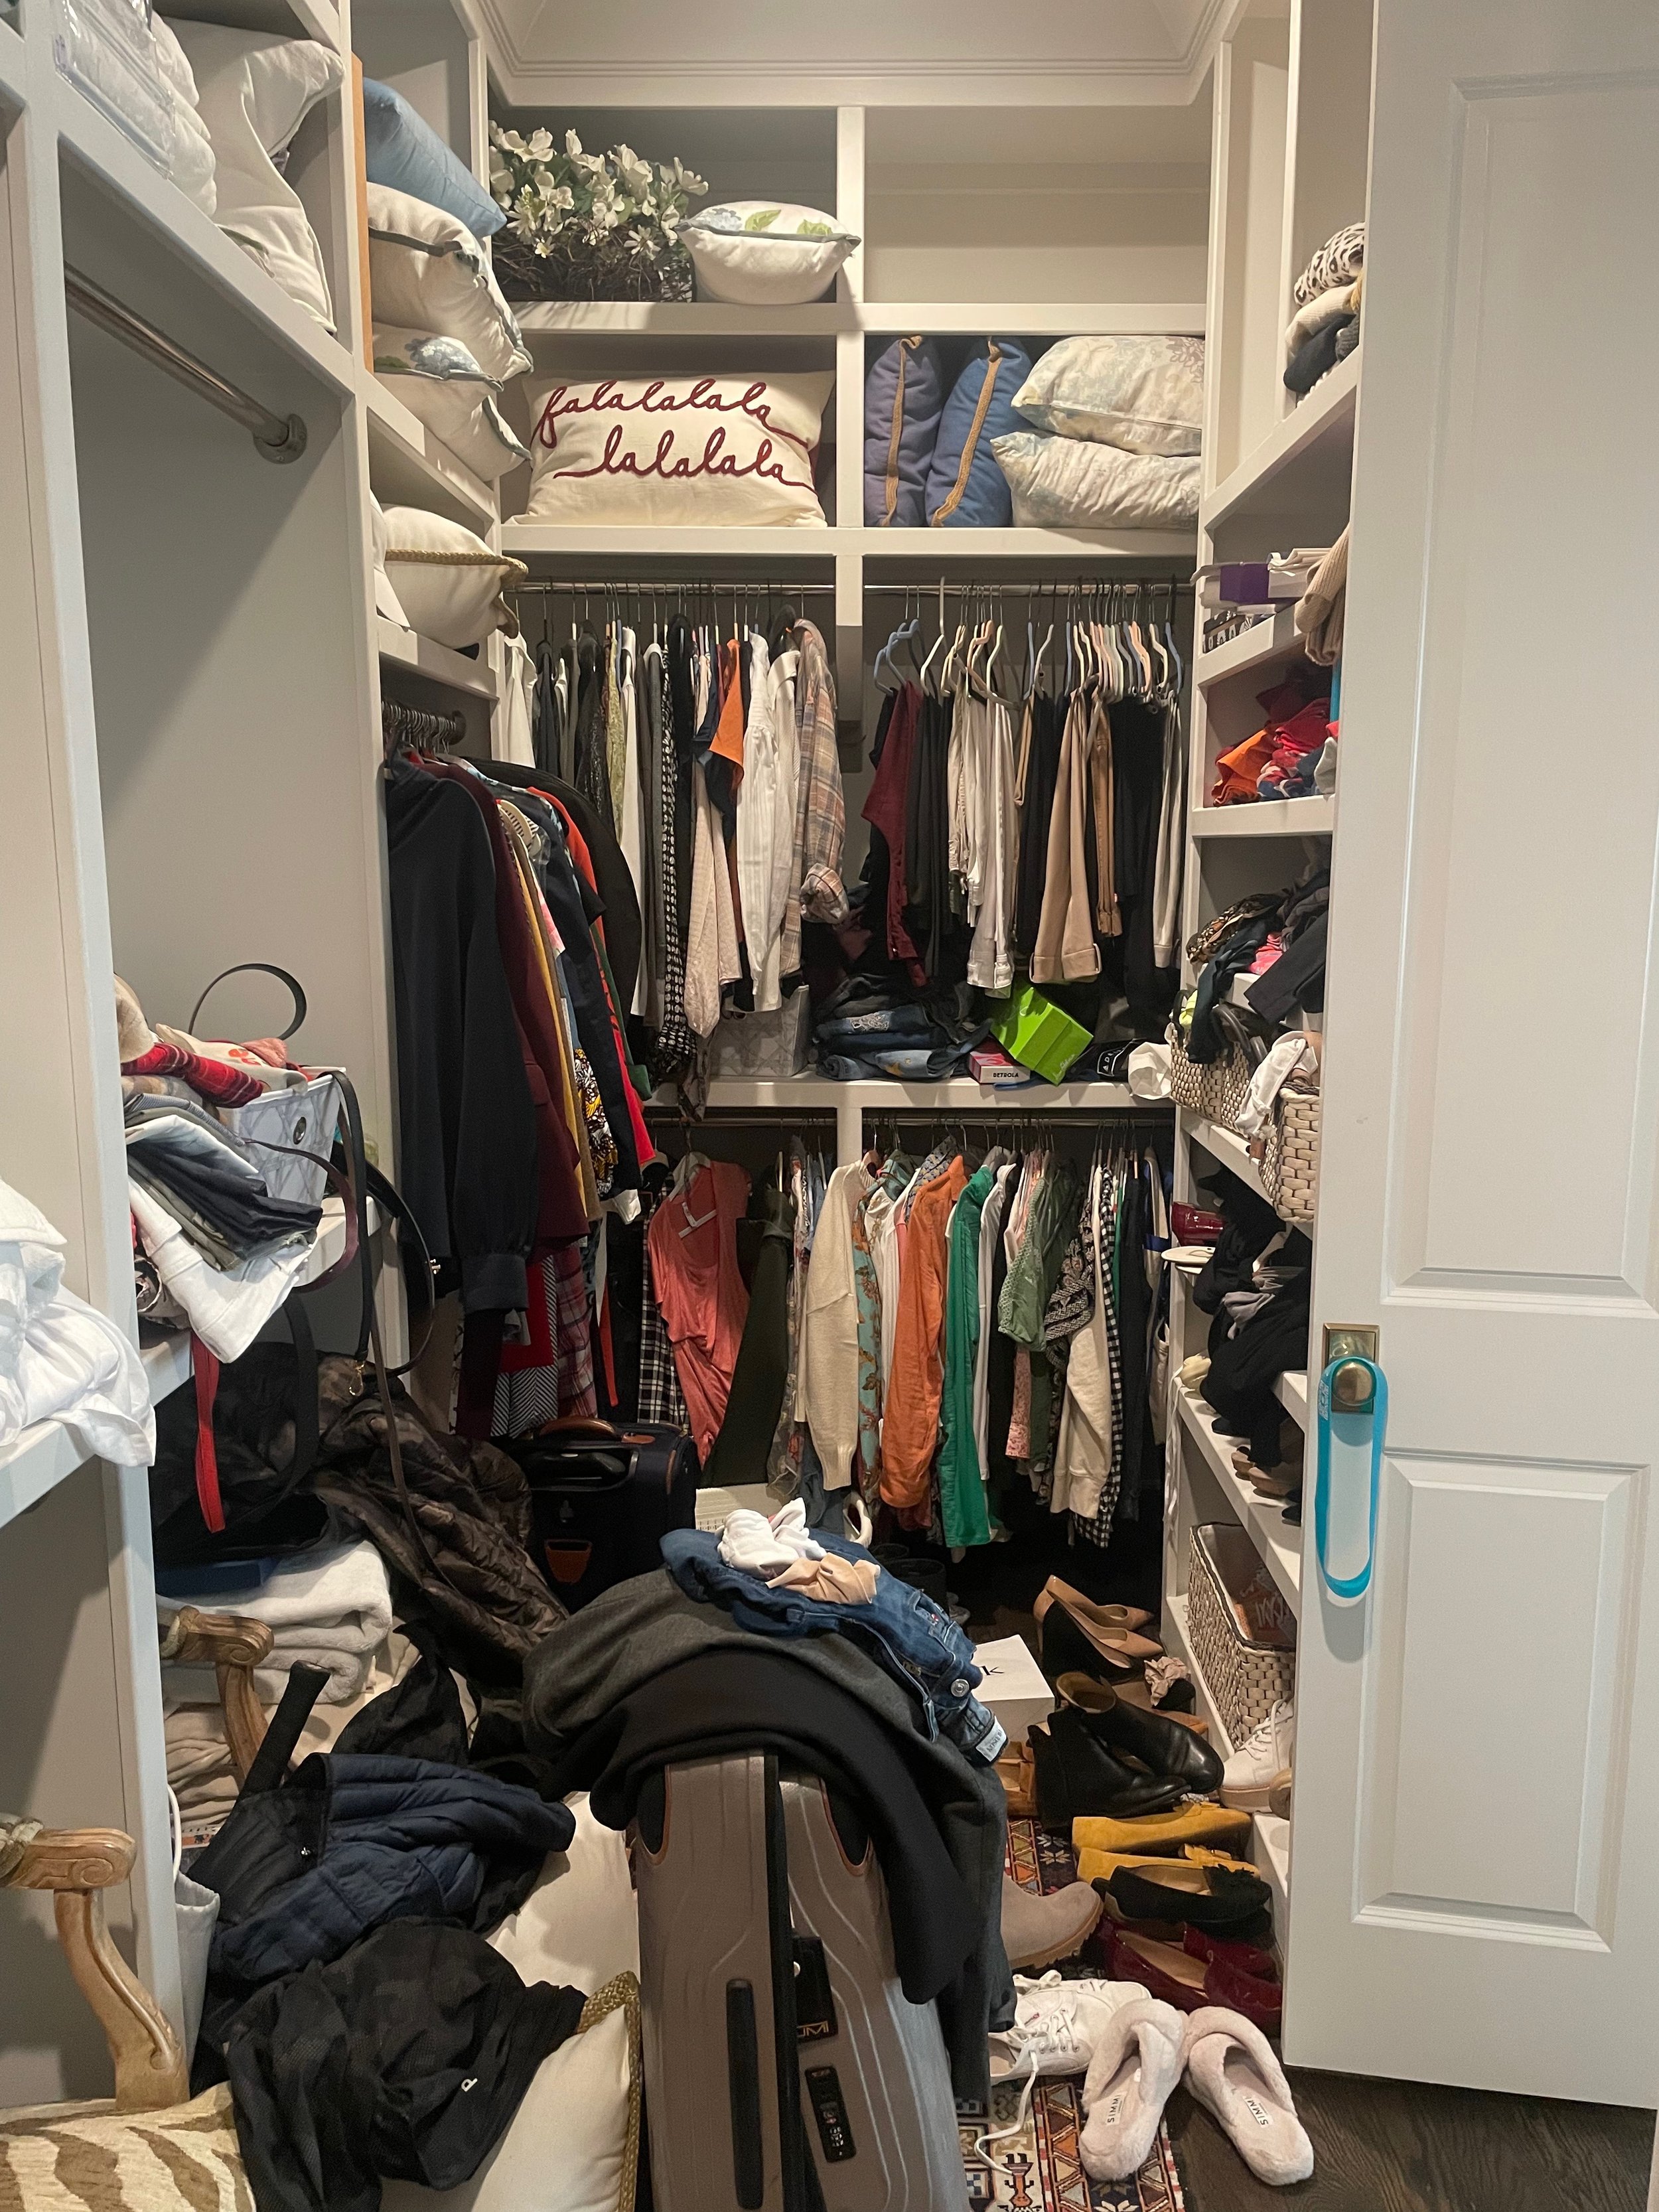 Purse Organization Ideas - Closetful of Clothes